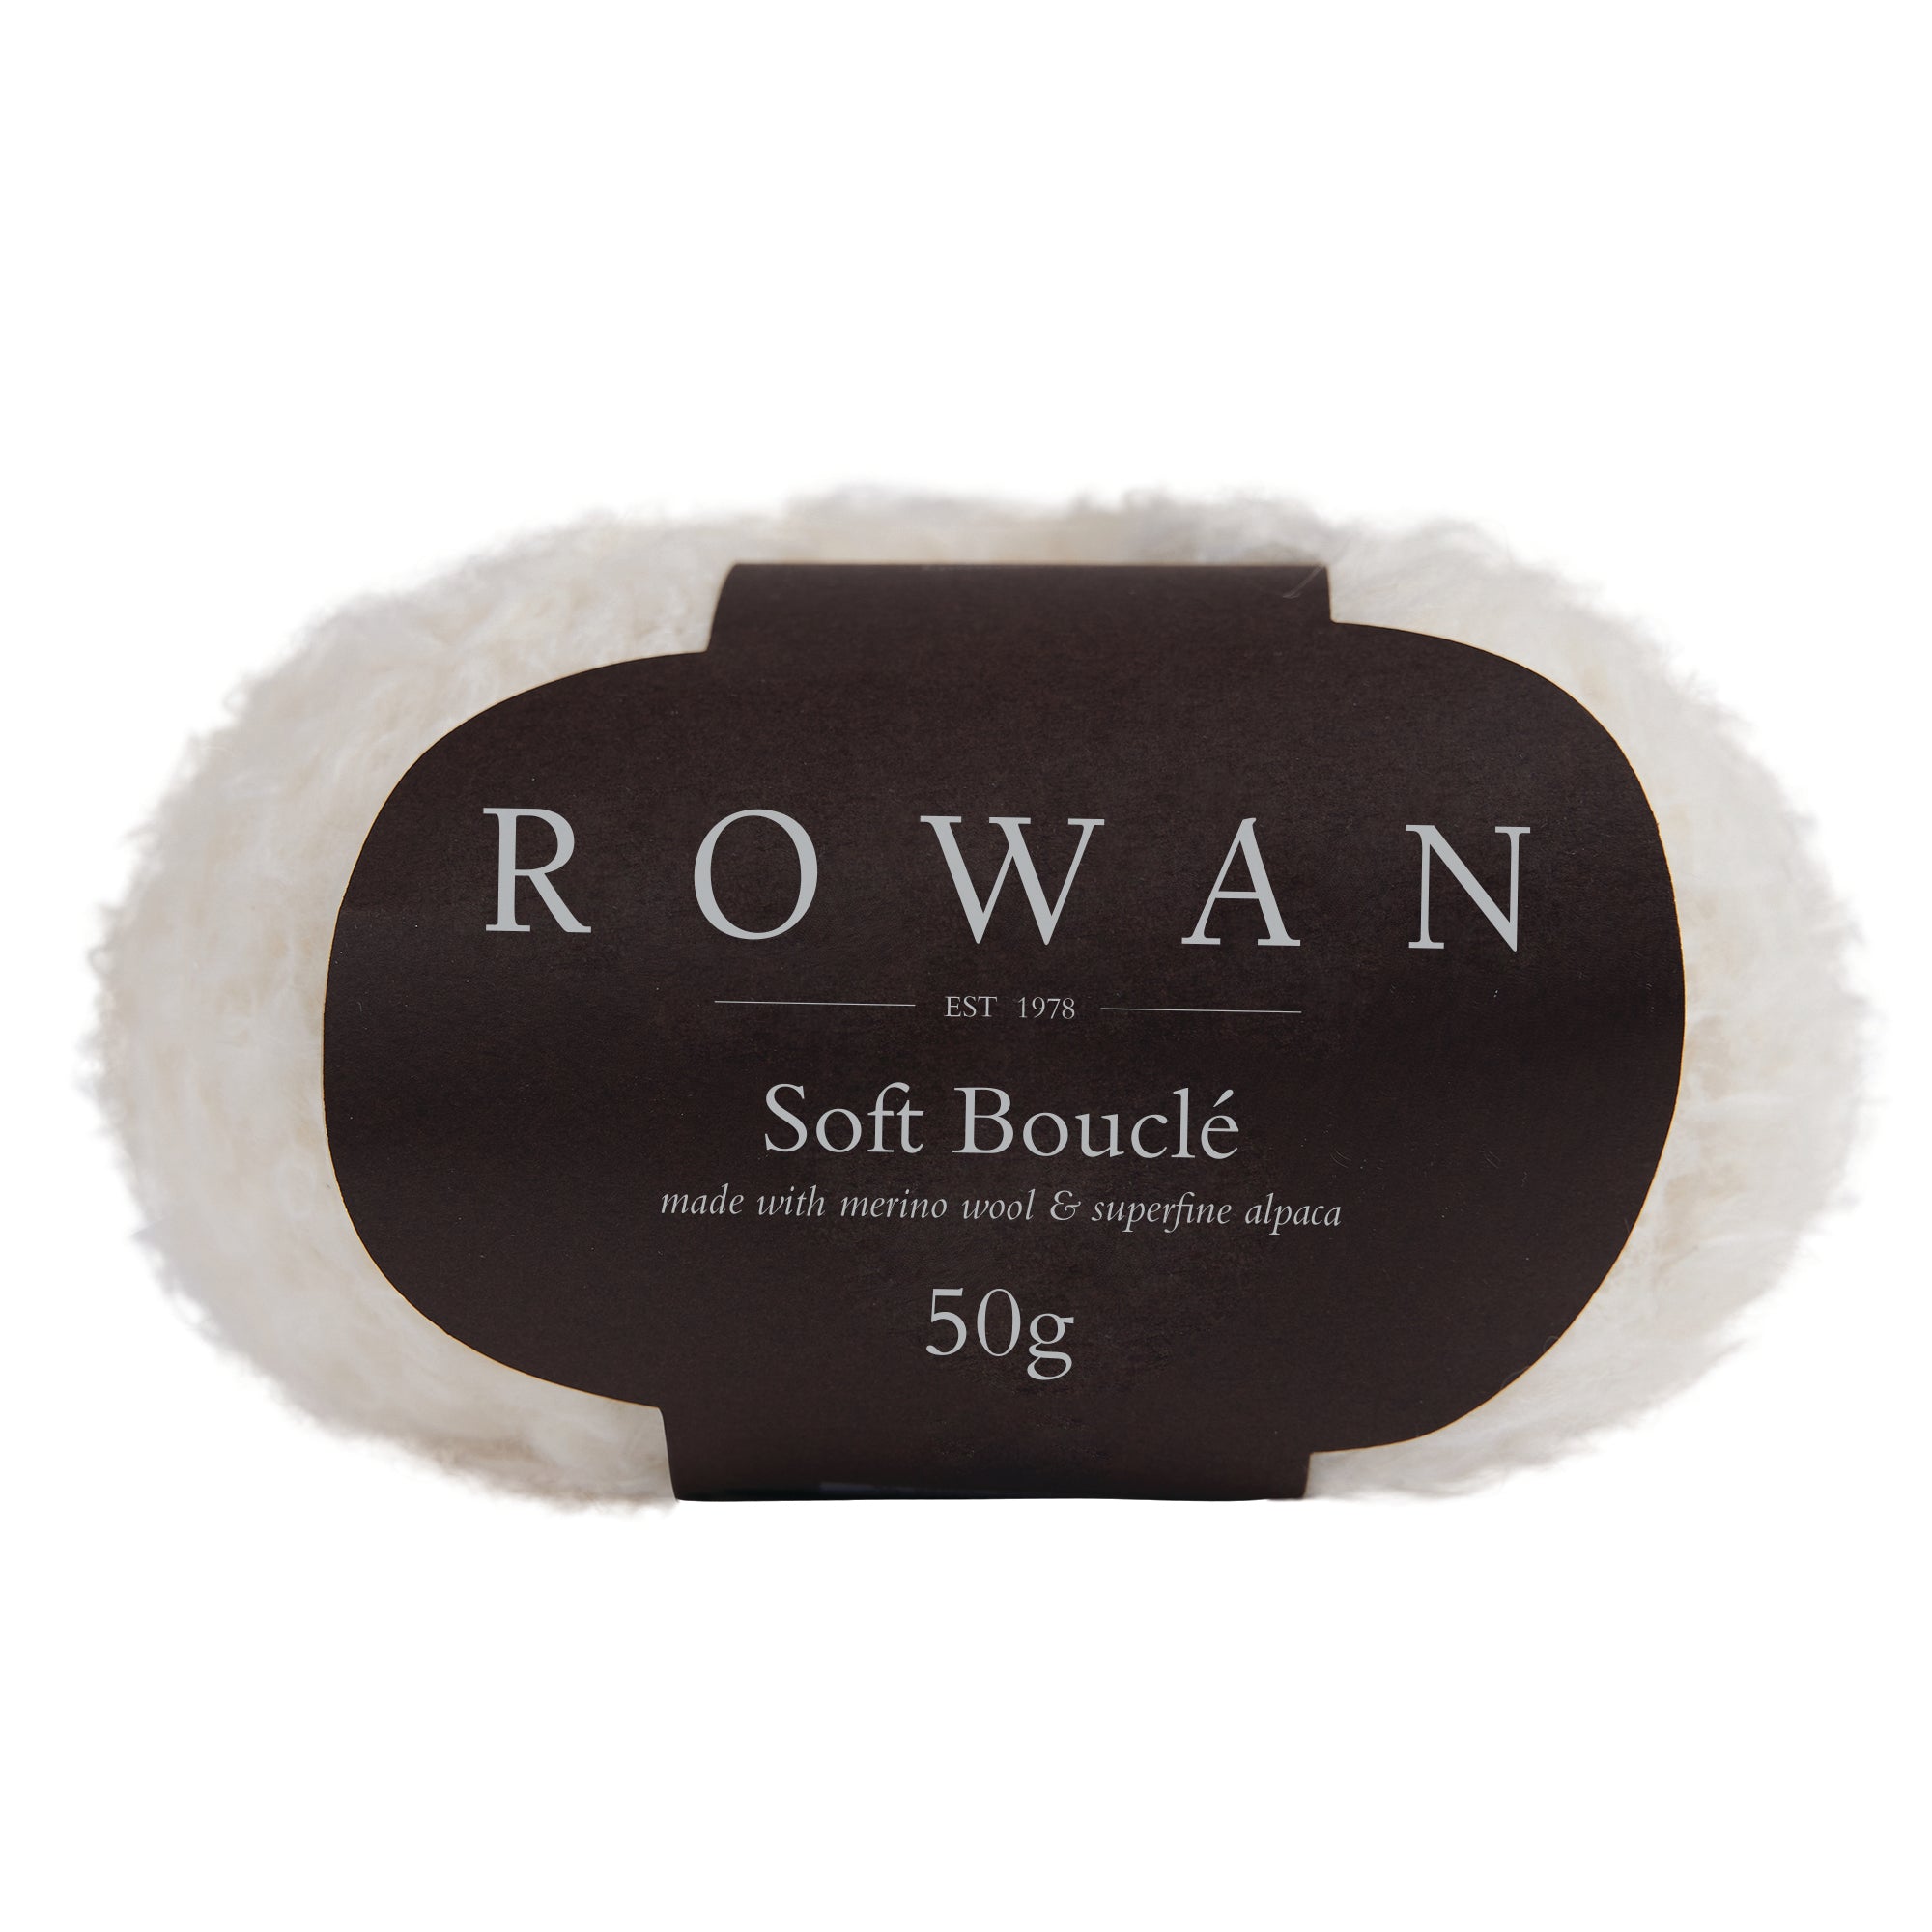 Soft Bouclé, Rowan Knitting & Crochet Yarn